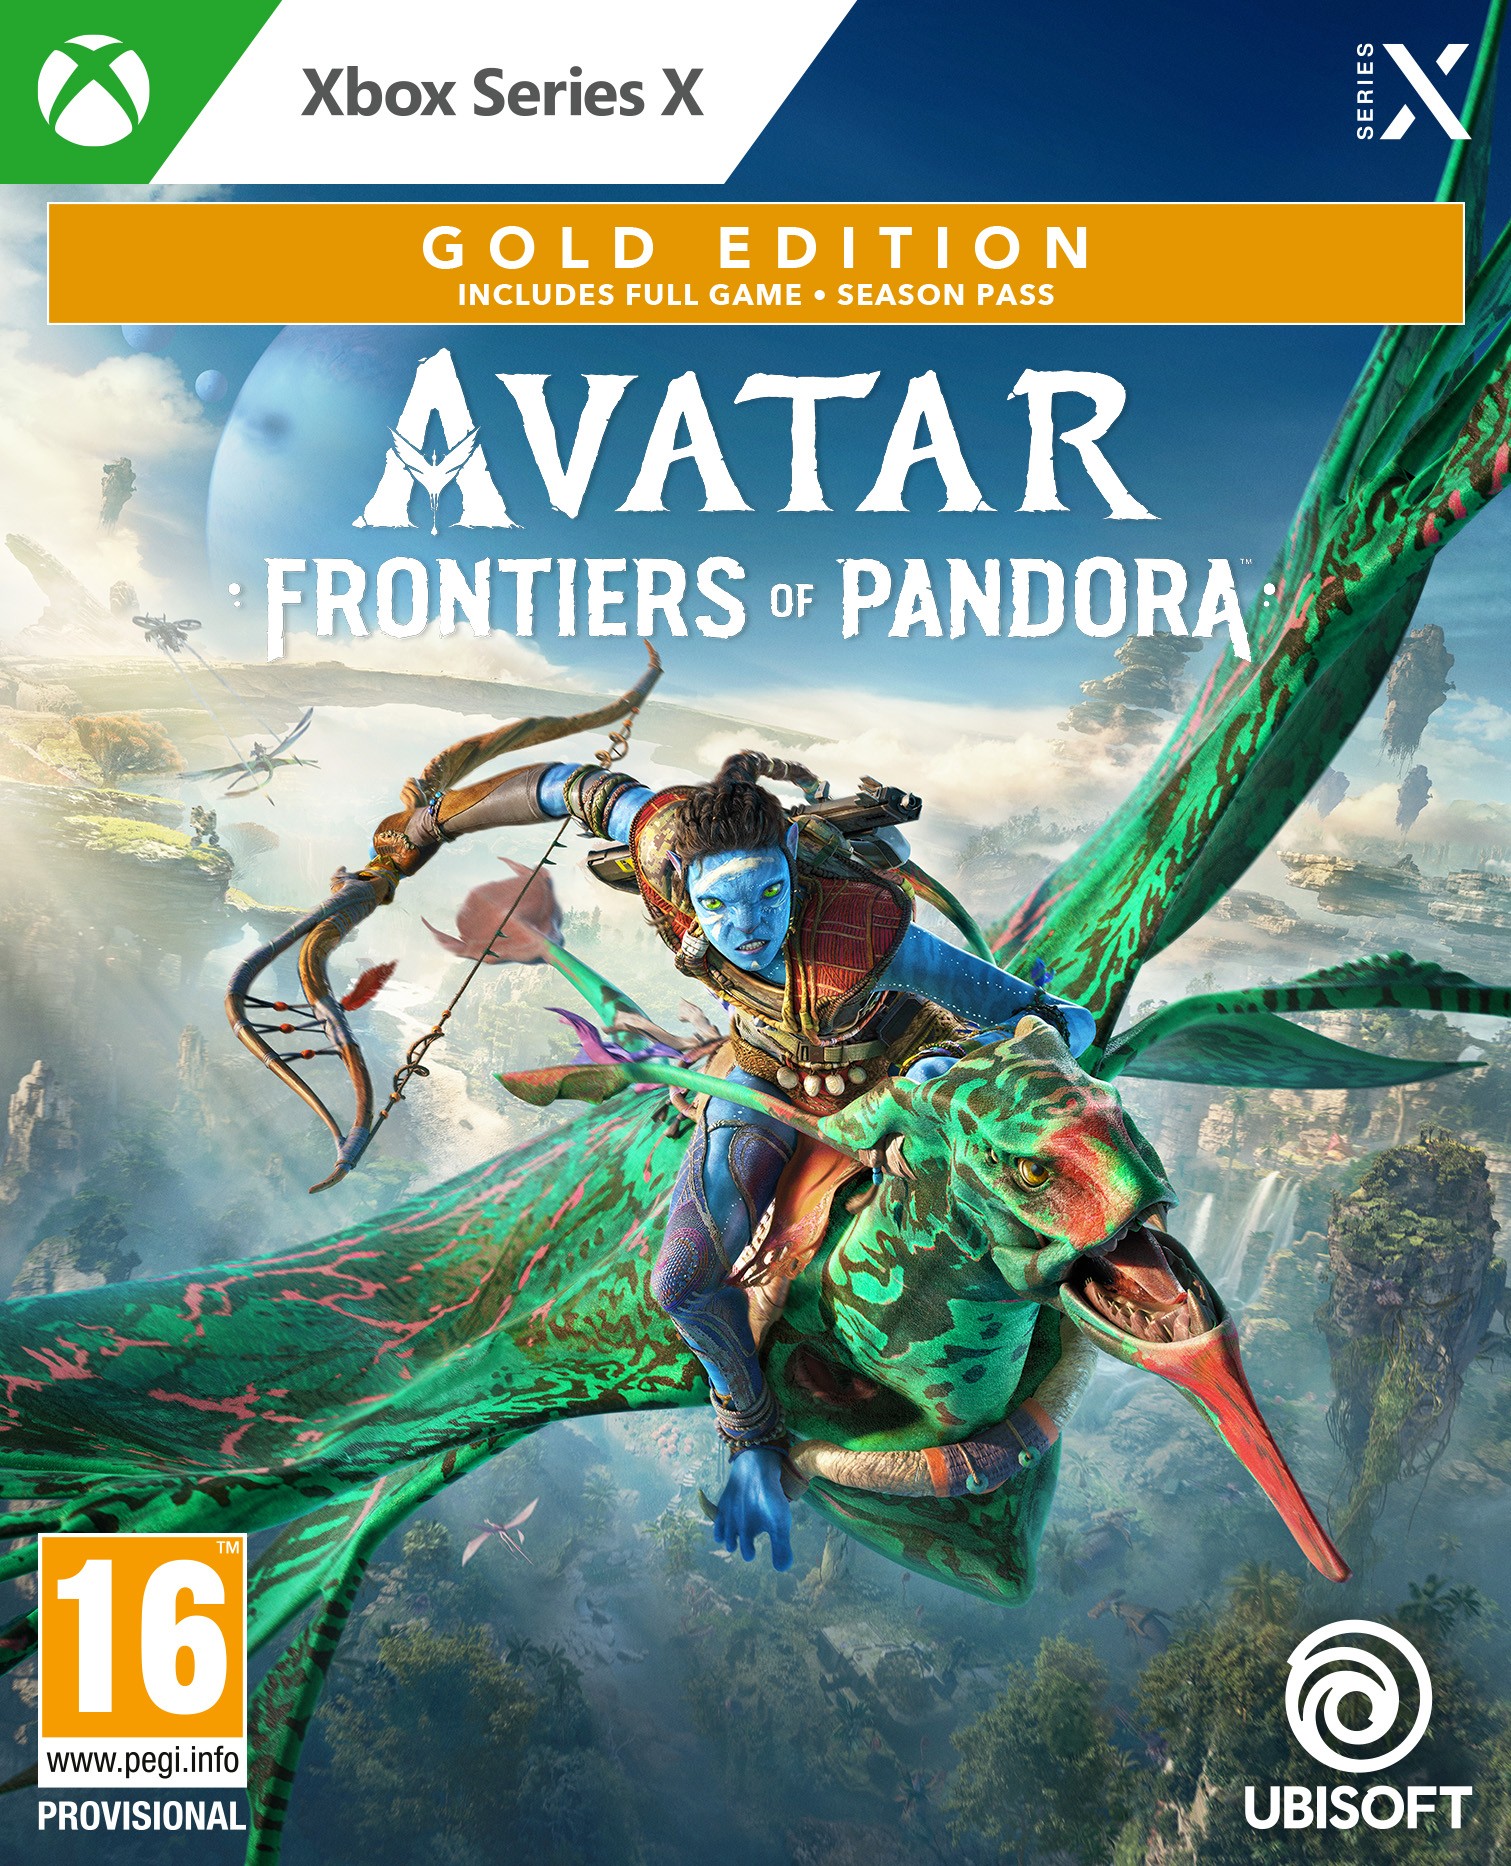 Avatar: Frontiers of Pandora Gold Edition + Preorder Bonus